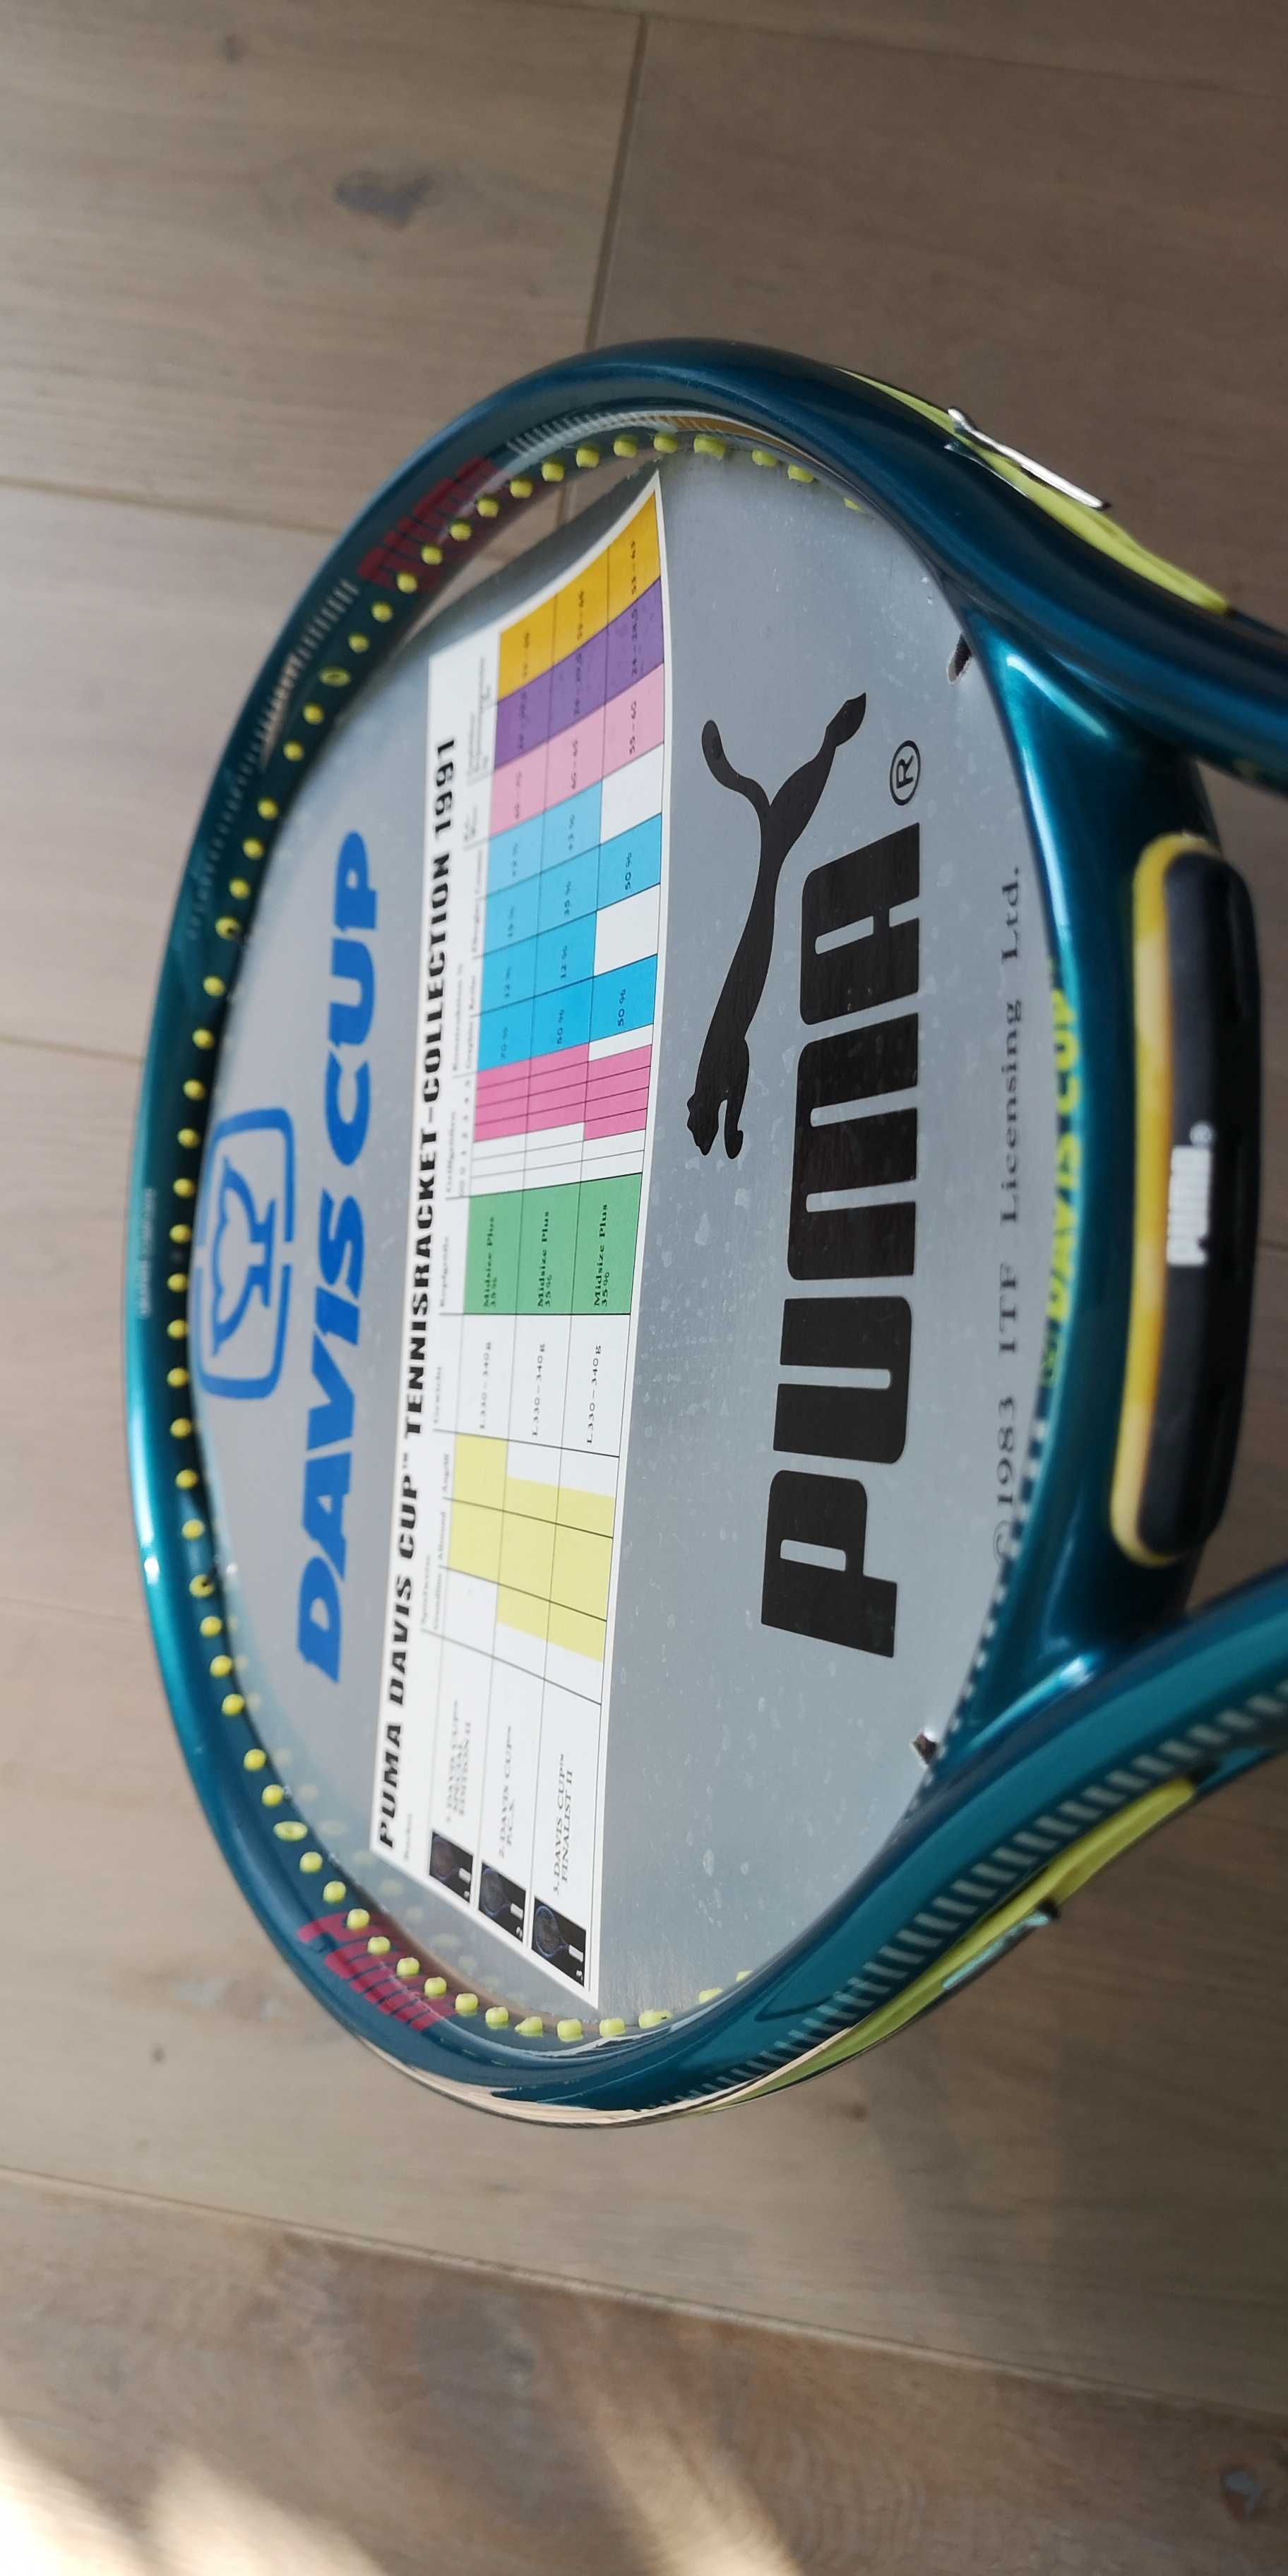 Rakieta tenisowa PUMA Davis Cup, NOWA! perełka kolekcjonerska